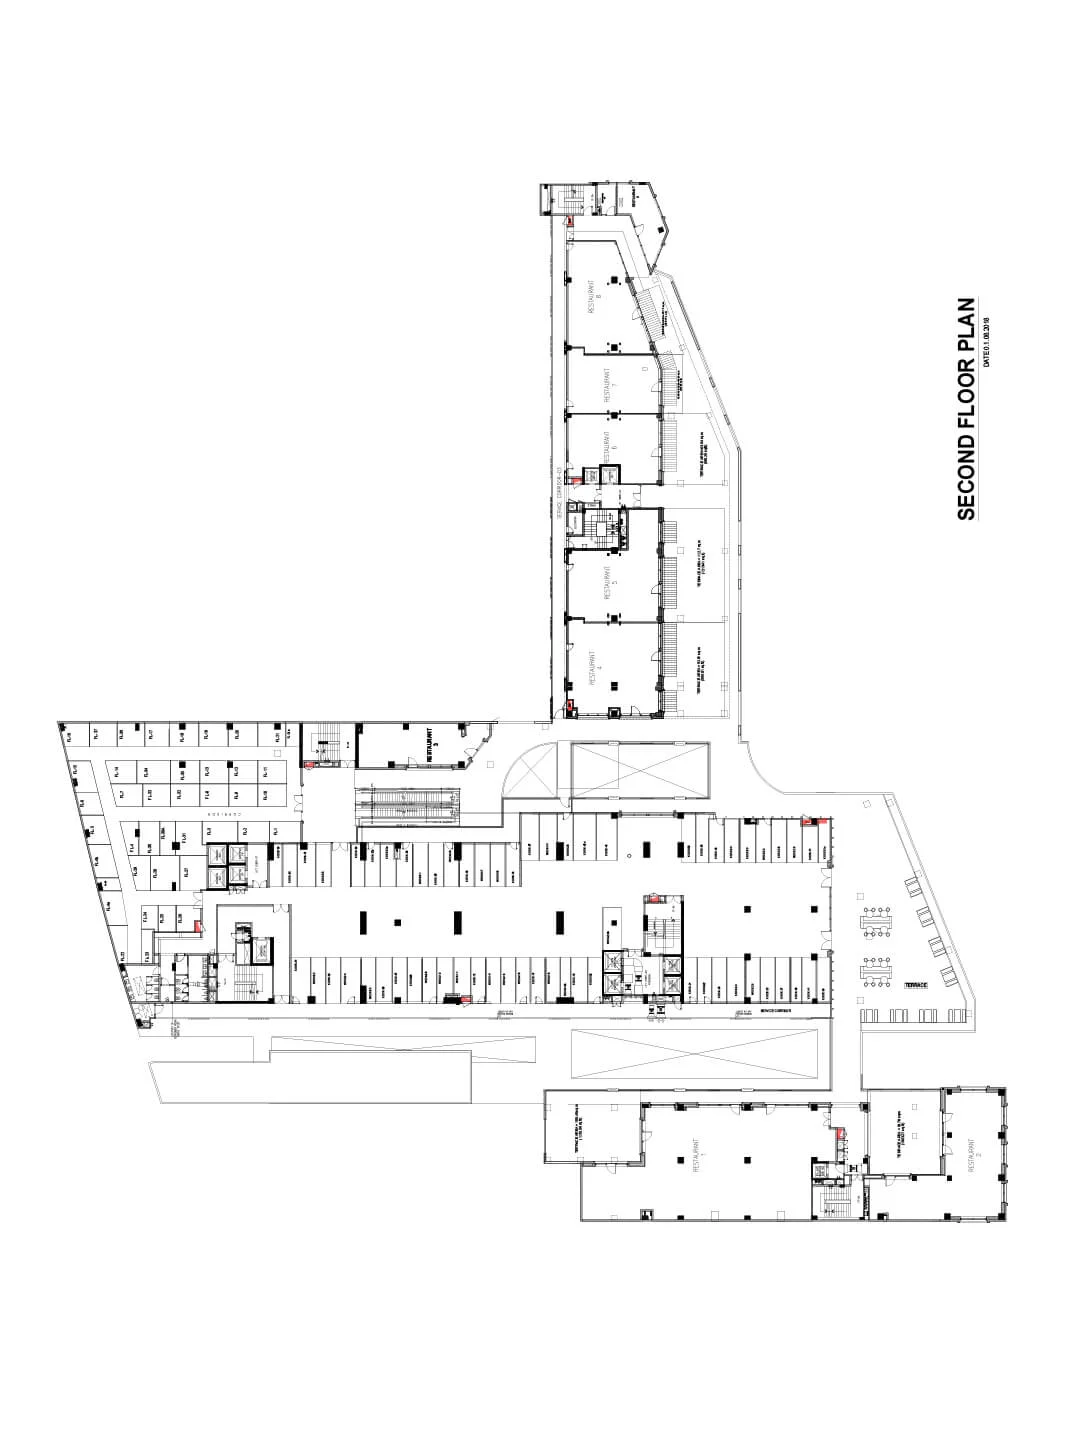 Street second floor plan layout